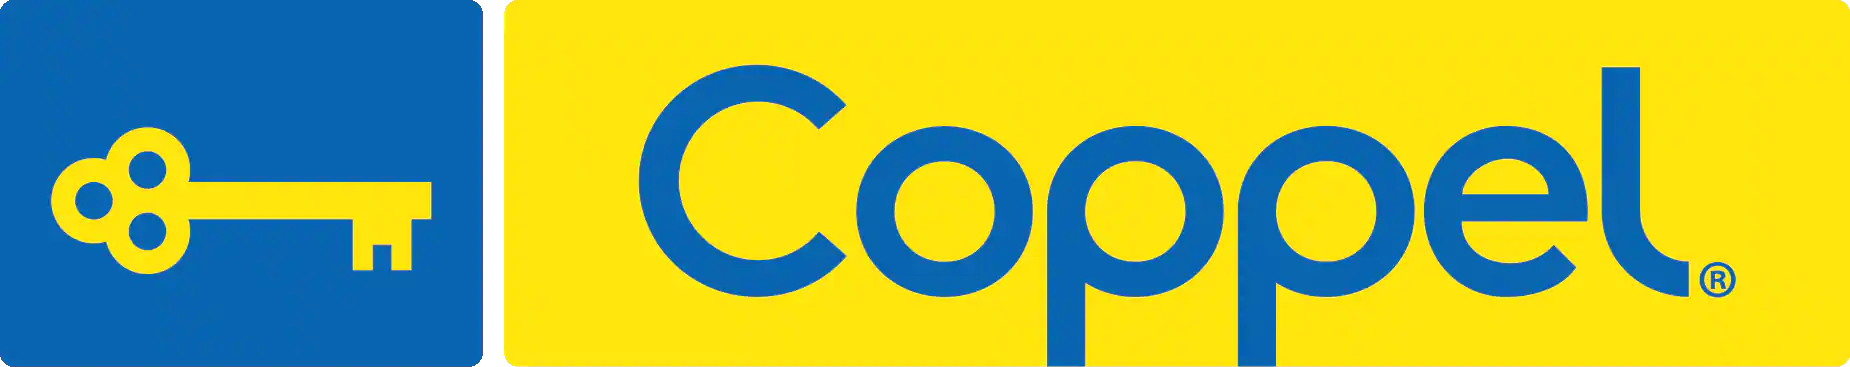 logoCoppel